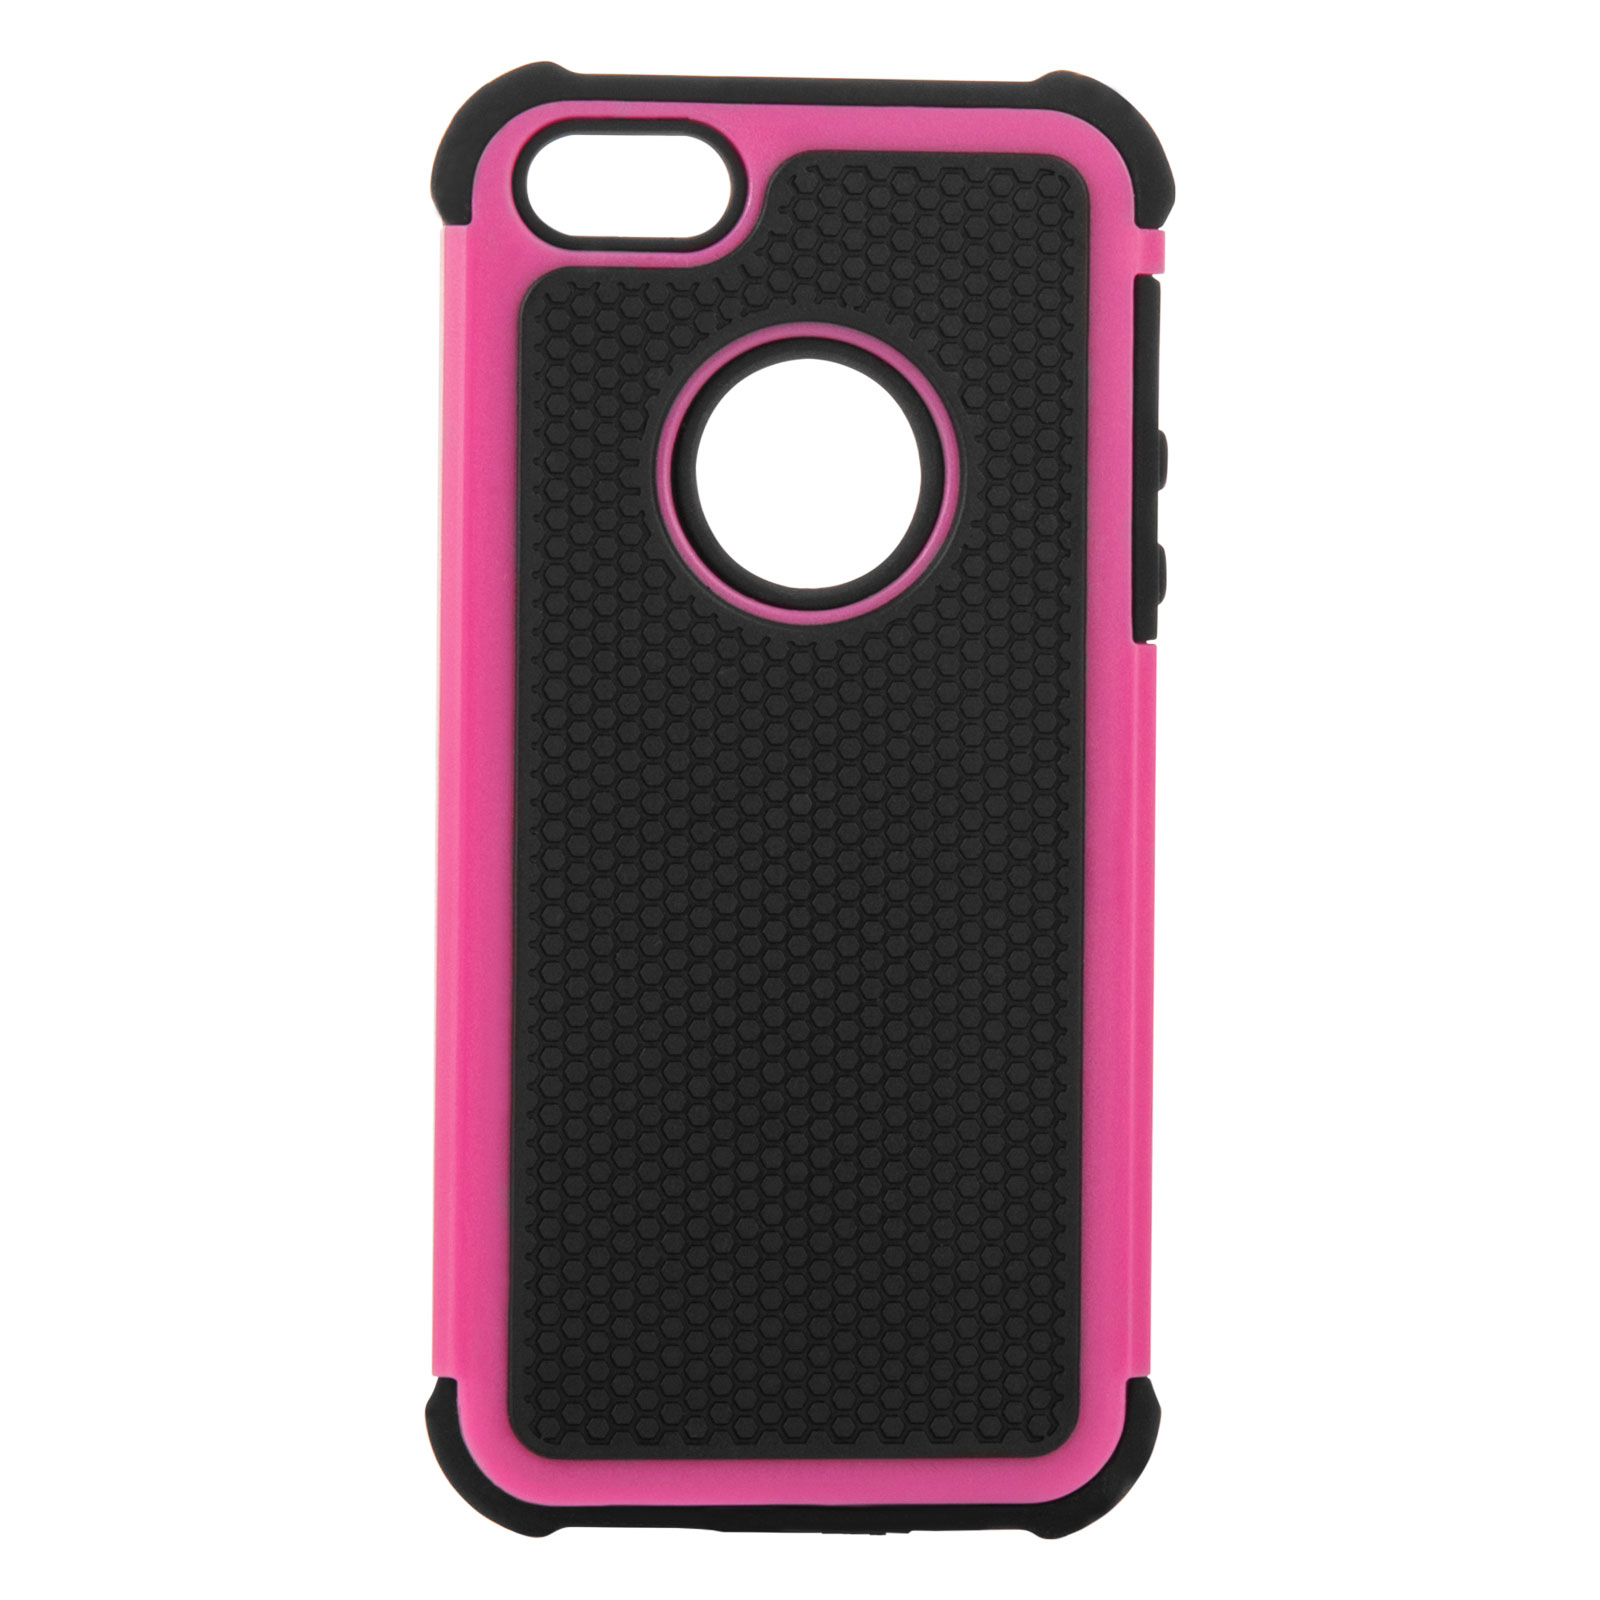 Apple iPhone 5S Grip Combo - Hot Pink